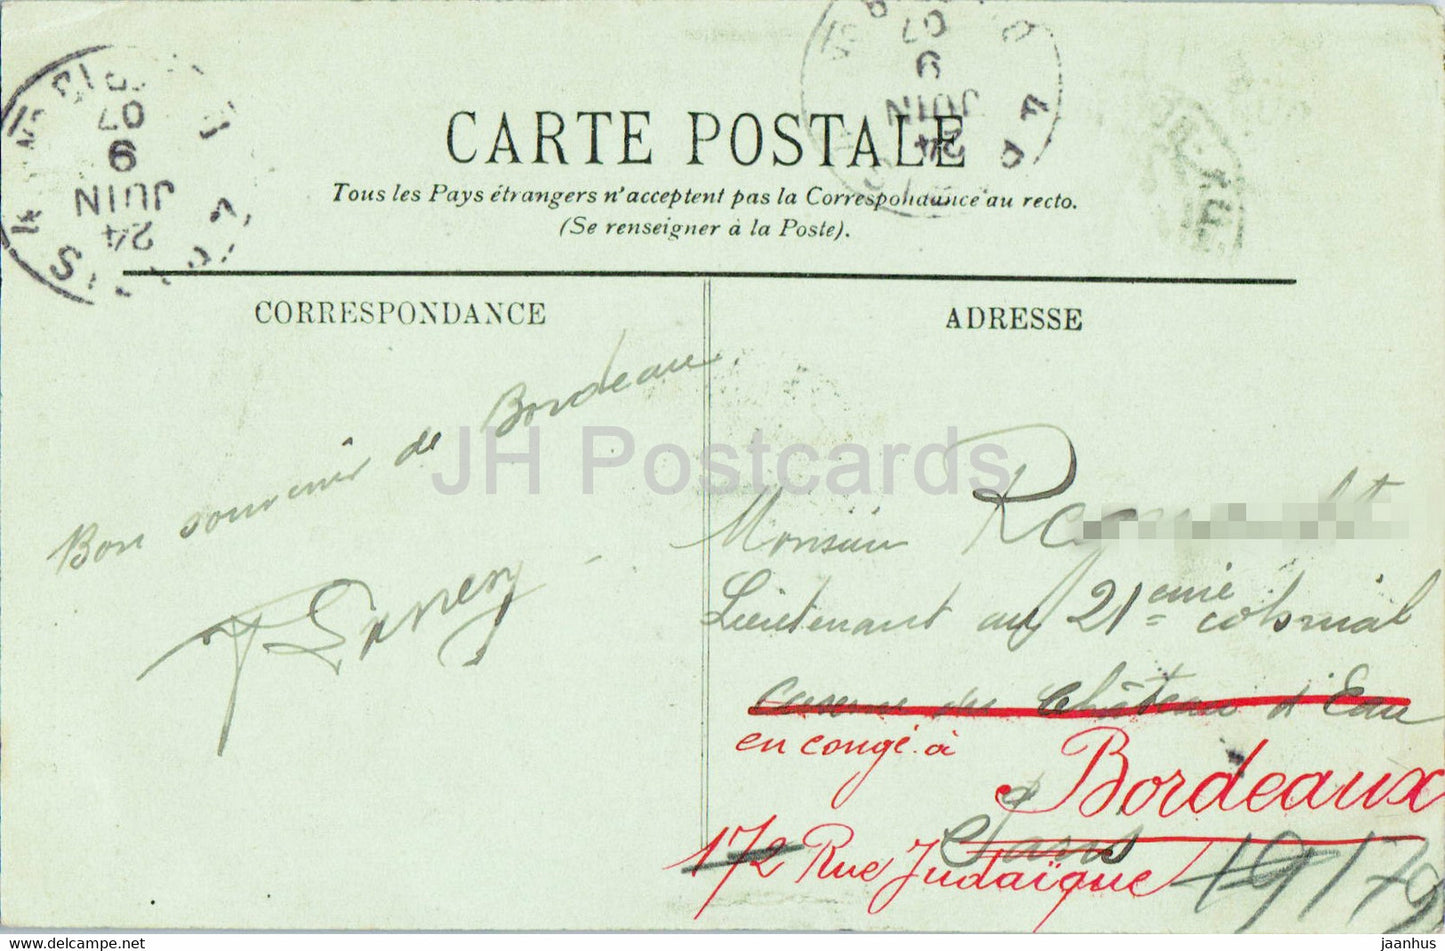 Bordeaux - Le monument de Gambetta - 160 - old postcard - 1907 - France - used